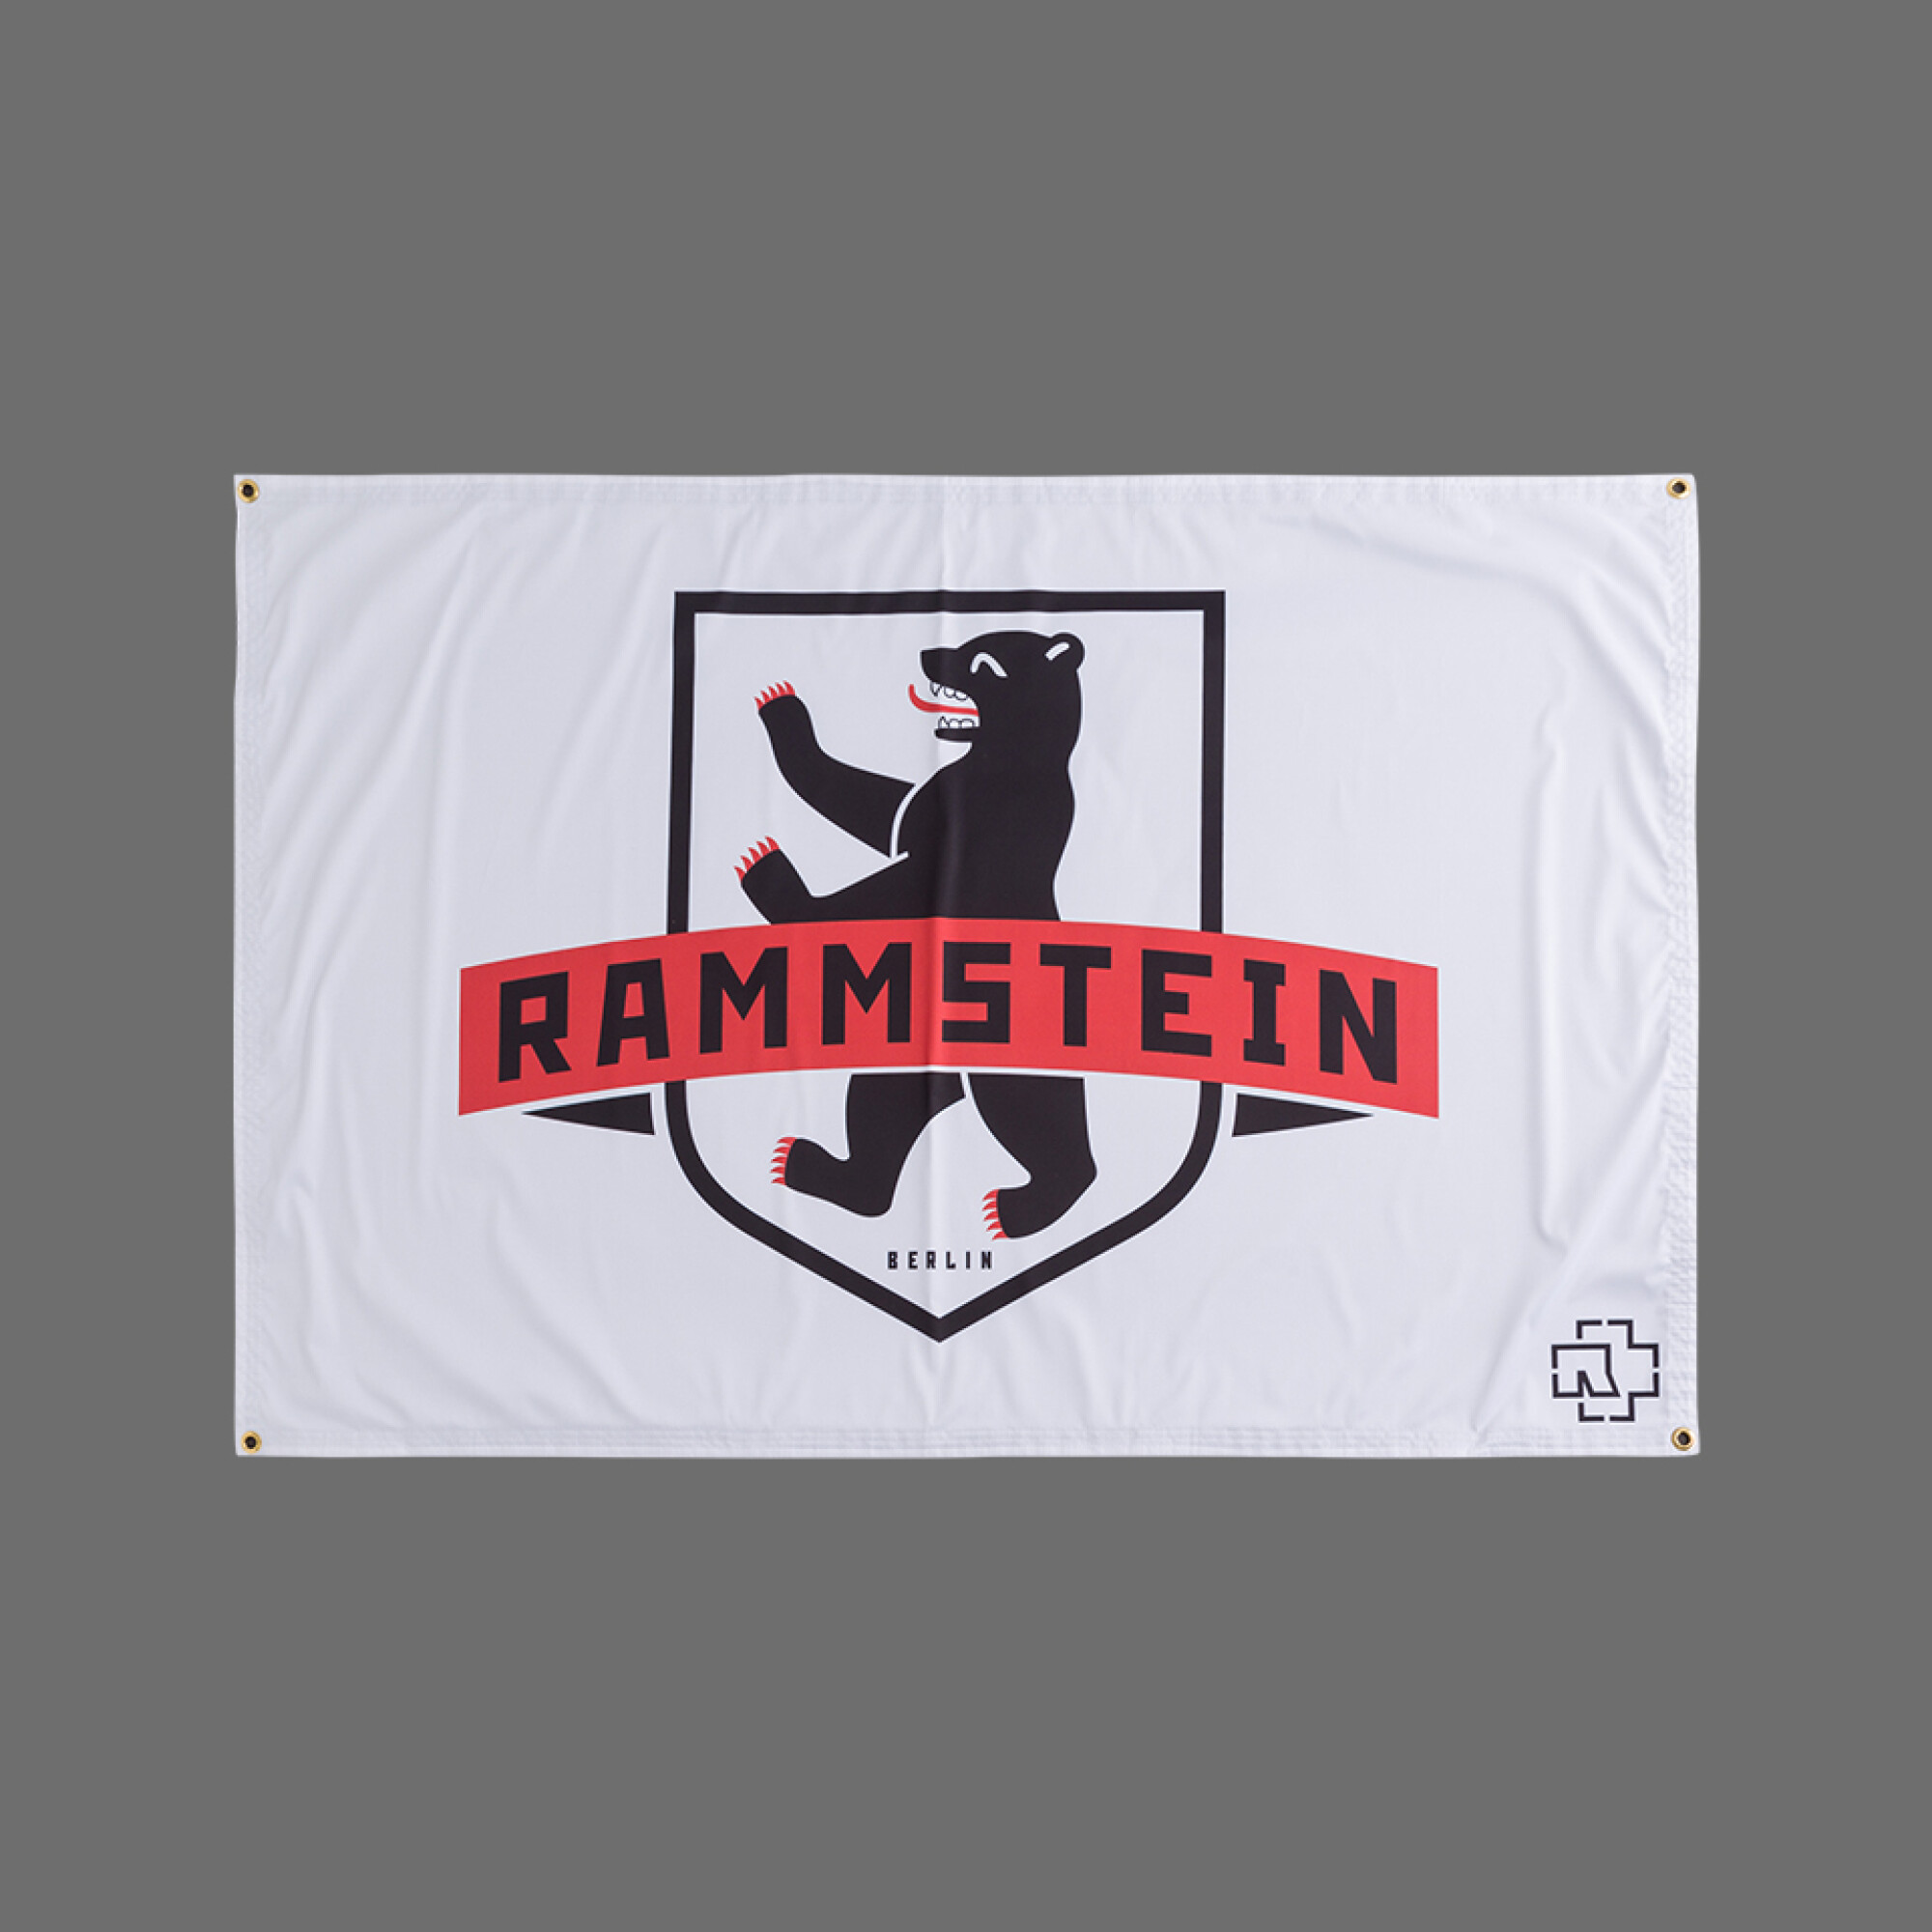 https://shop.rammstein.de/img/katalog/2034/3000/fahne-shop.jpg